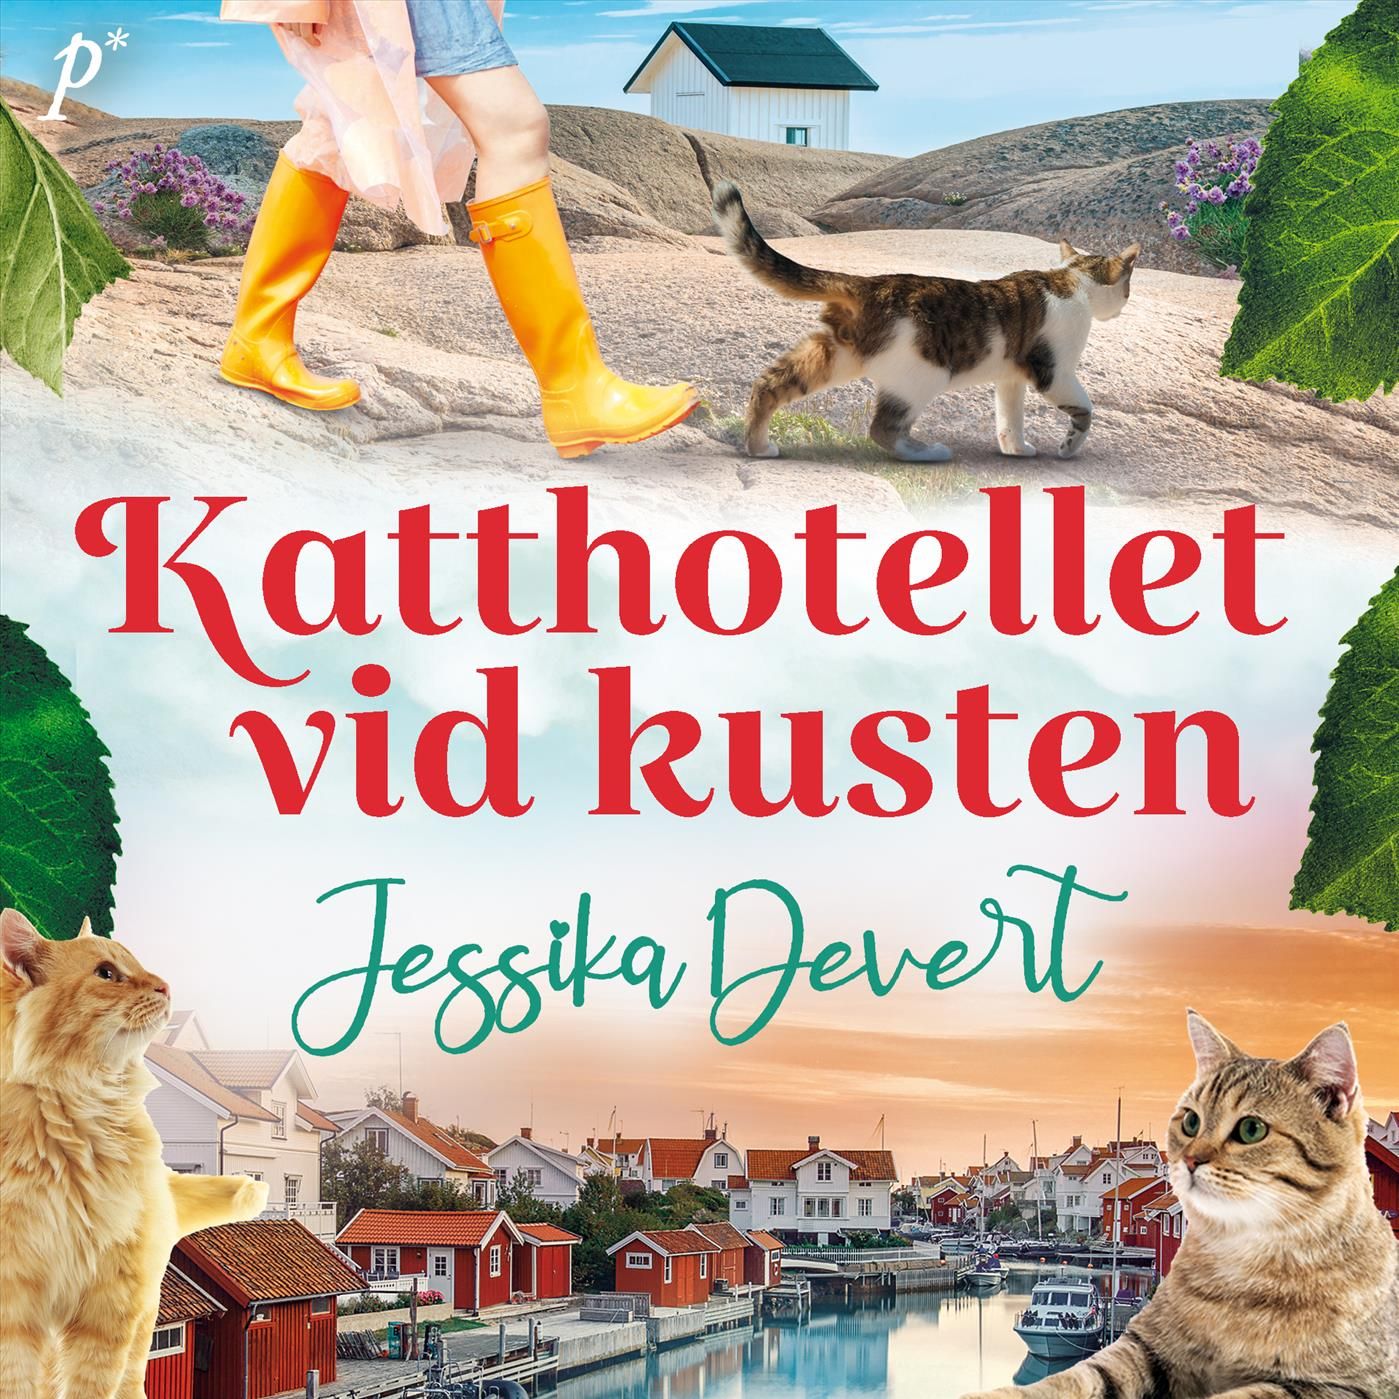 Katthotellet vid kusten, audiobook by Jessika Devert